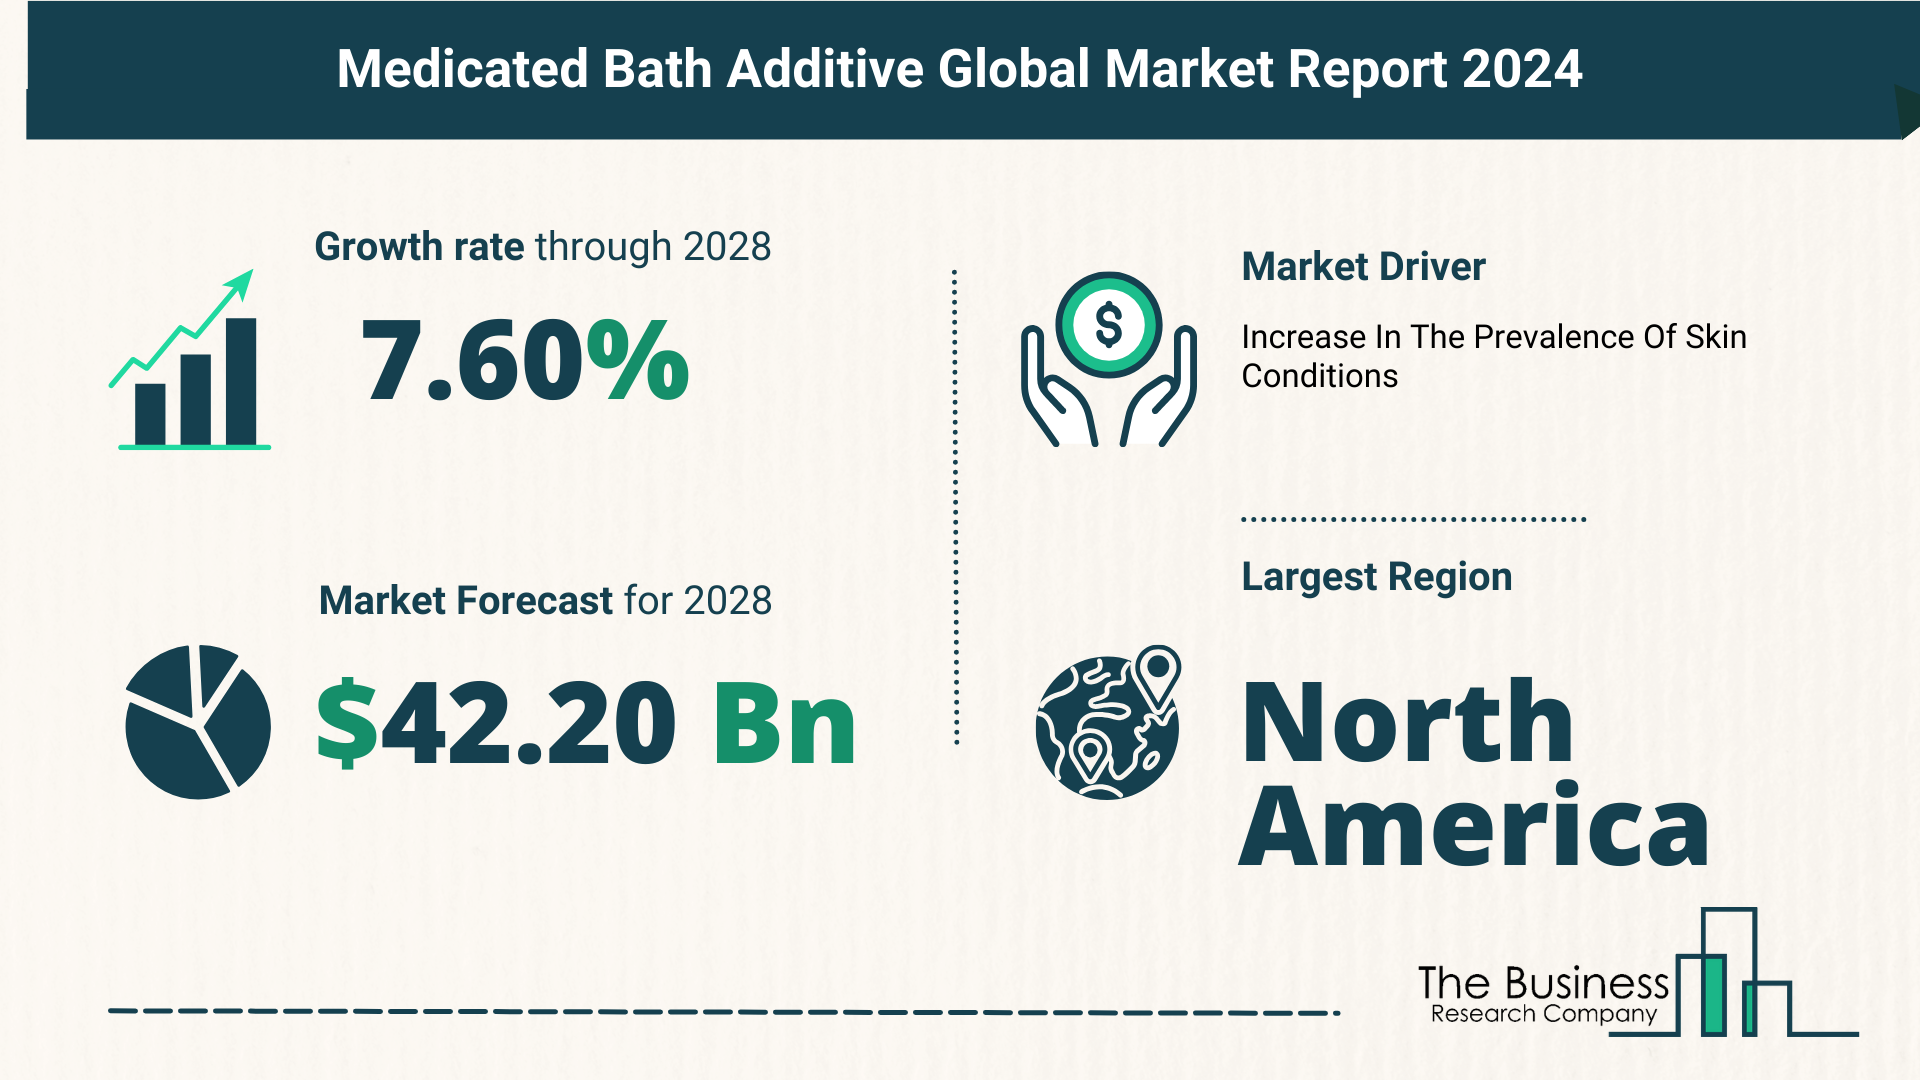 5 Key Insights On The Medicated Bath Additive Market 2024